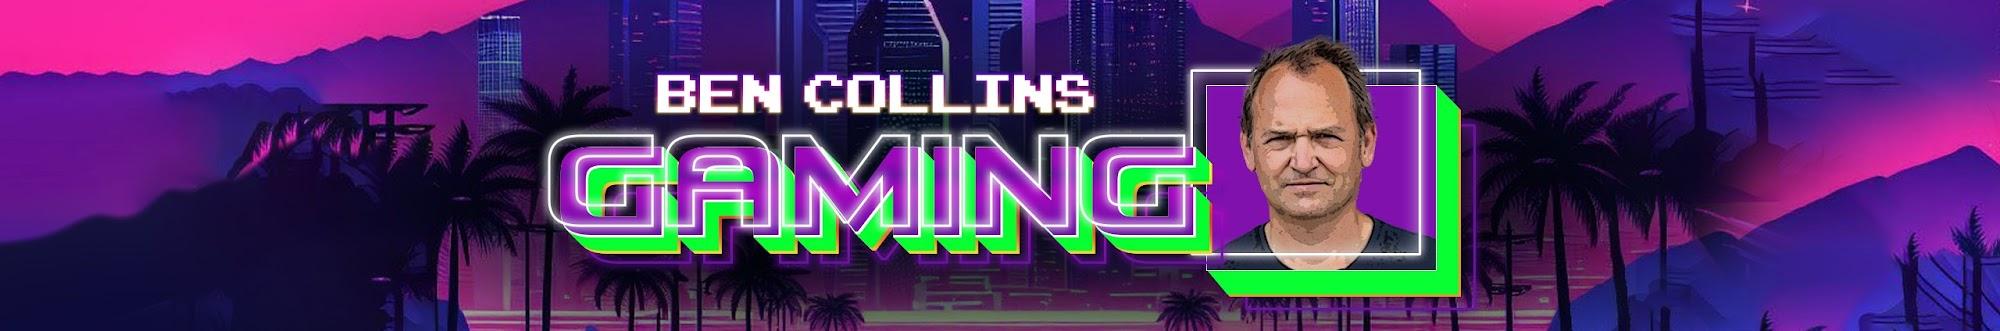 Ben Collins Gaming